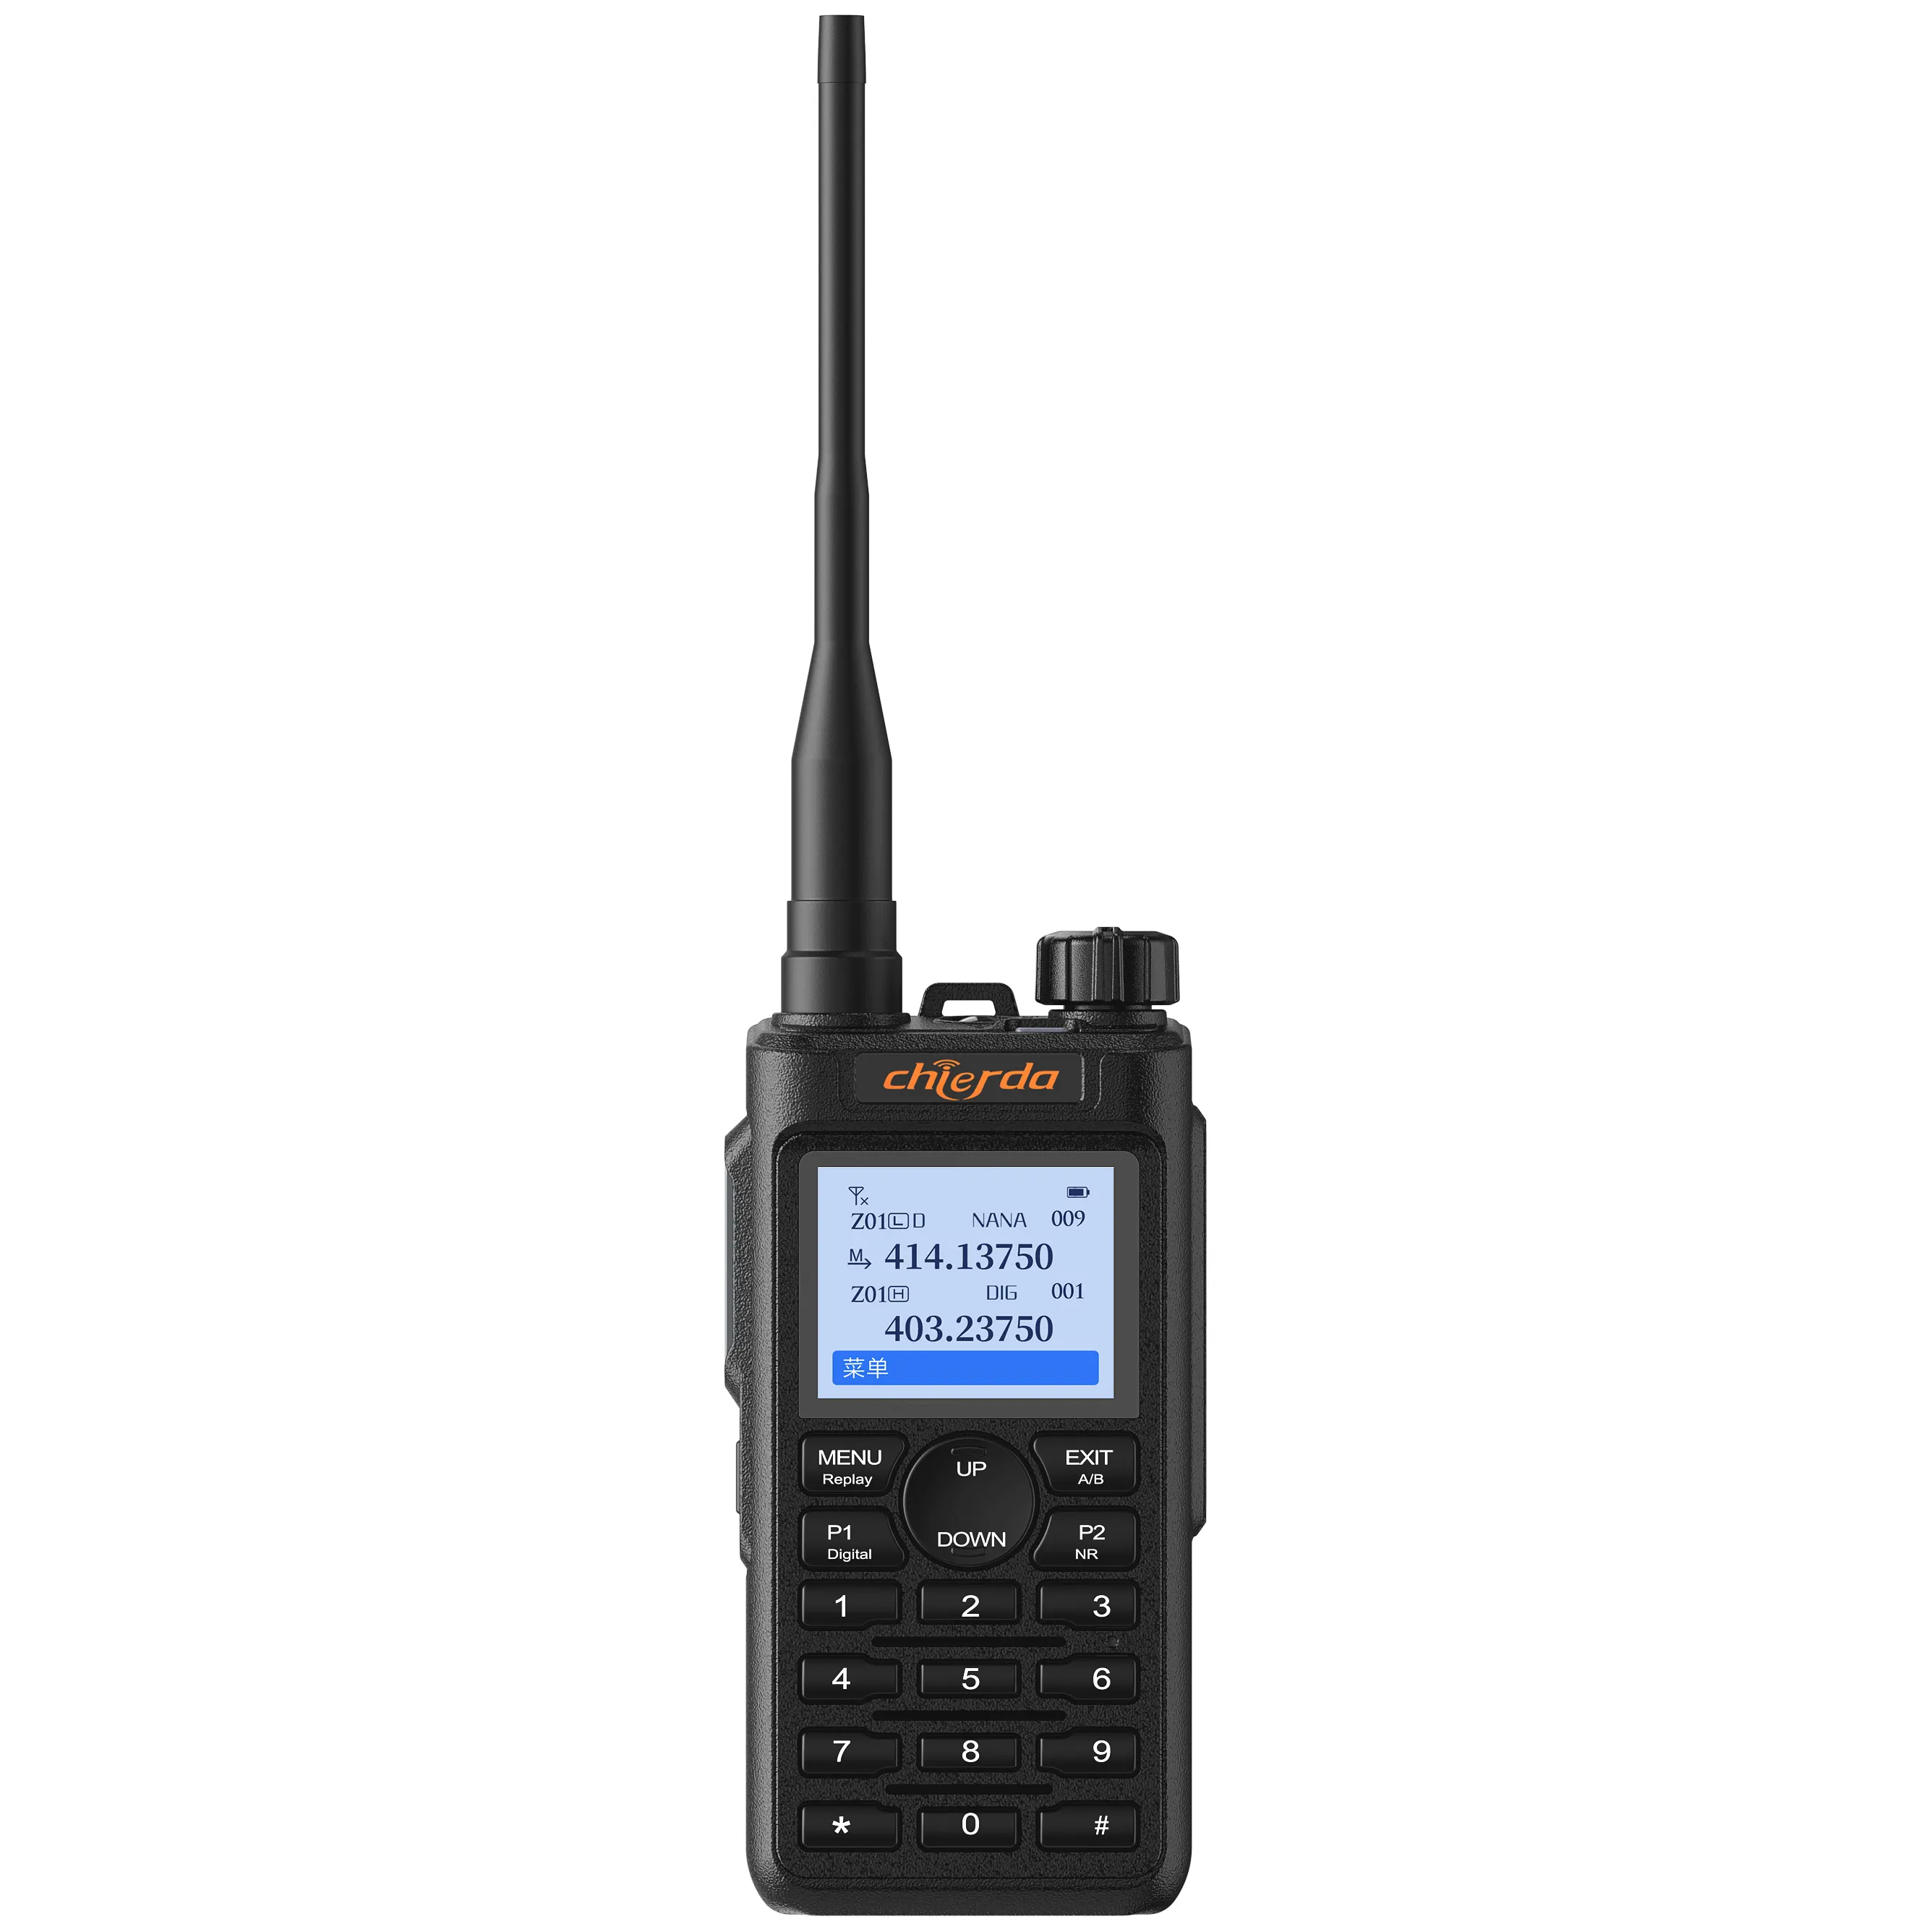 Chierda UV58D DMR Dual-Band amatör radyo walkie talkie aes256 şifreleme ile 5km